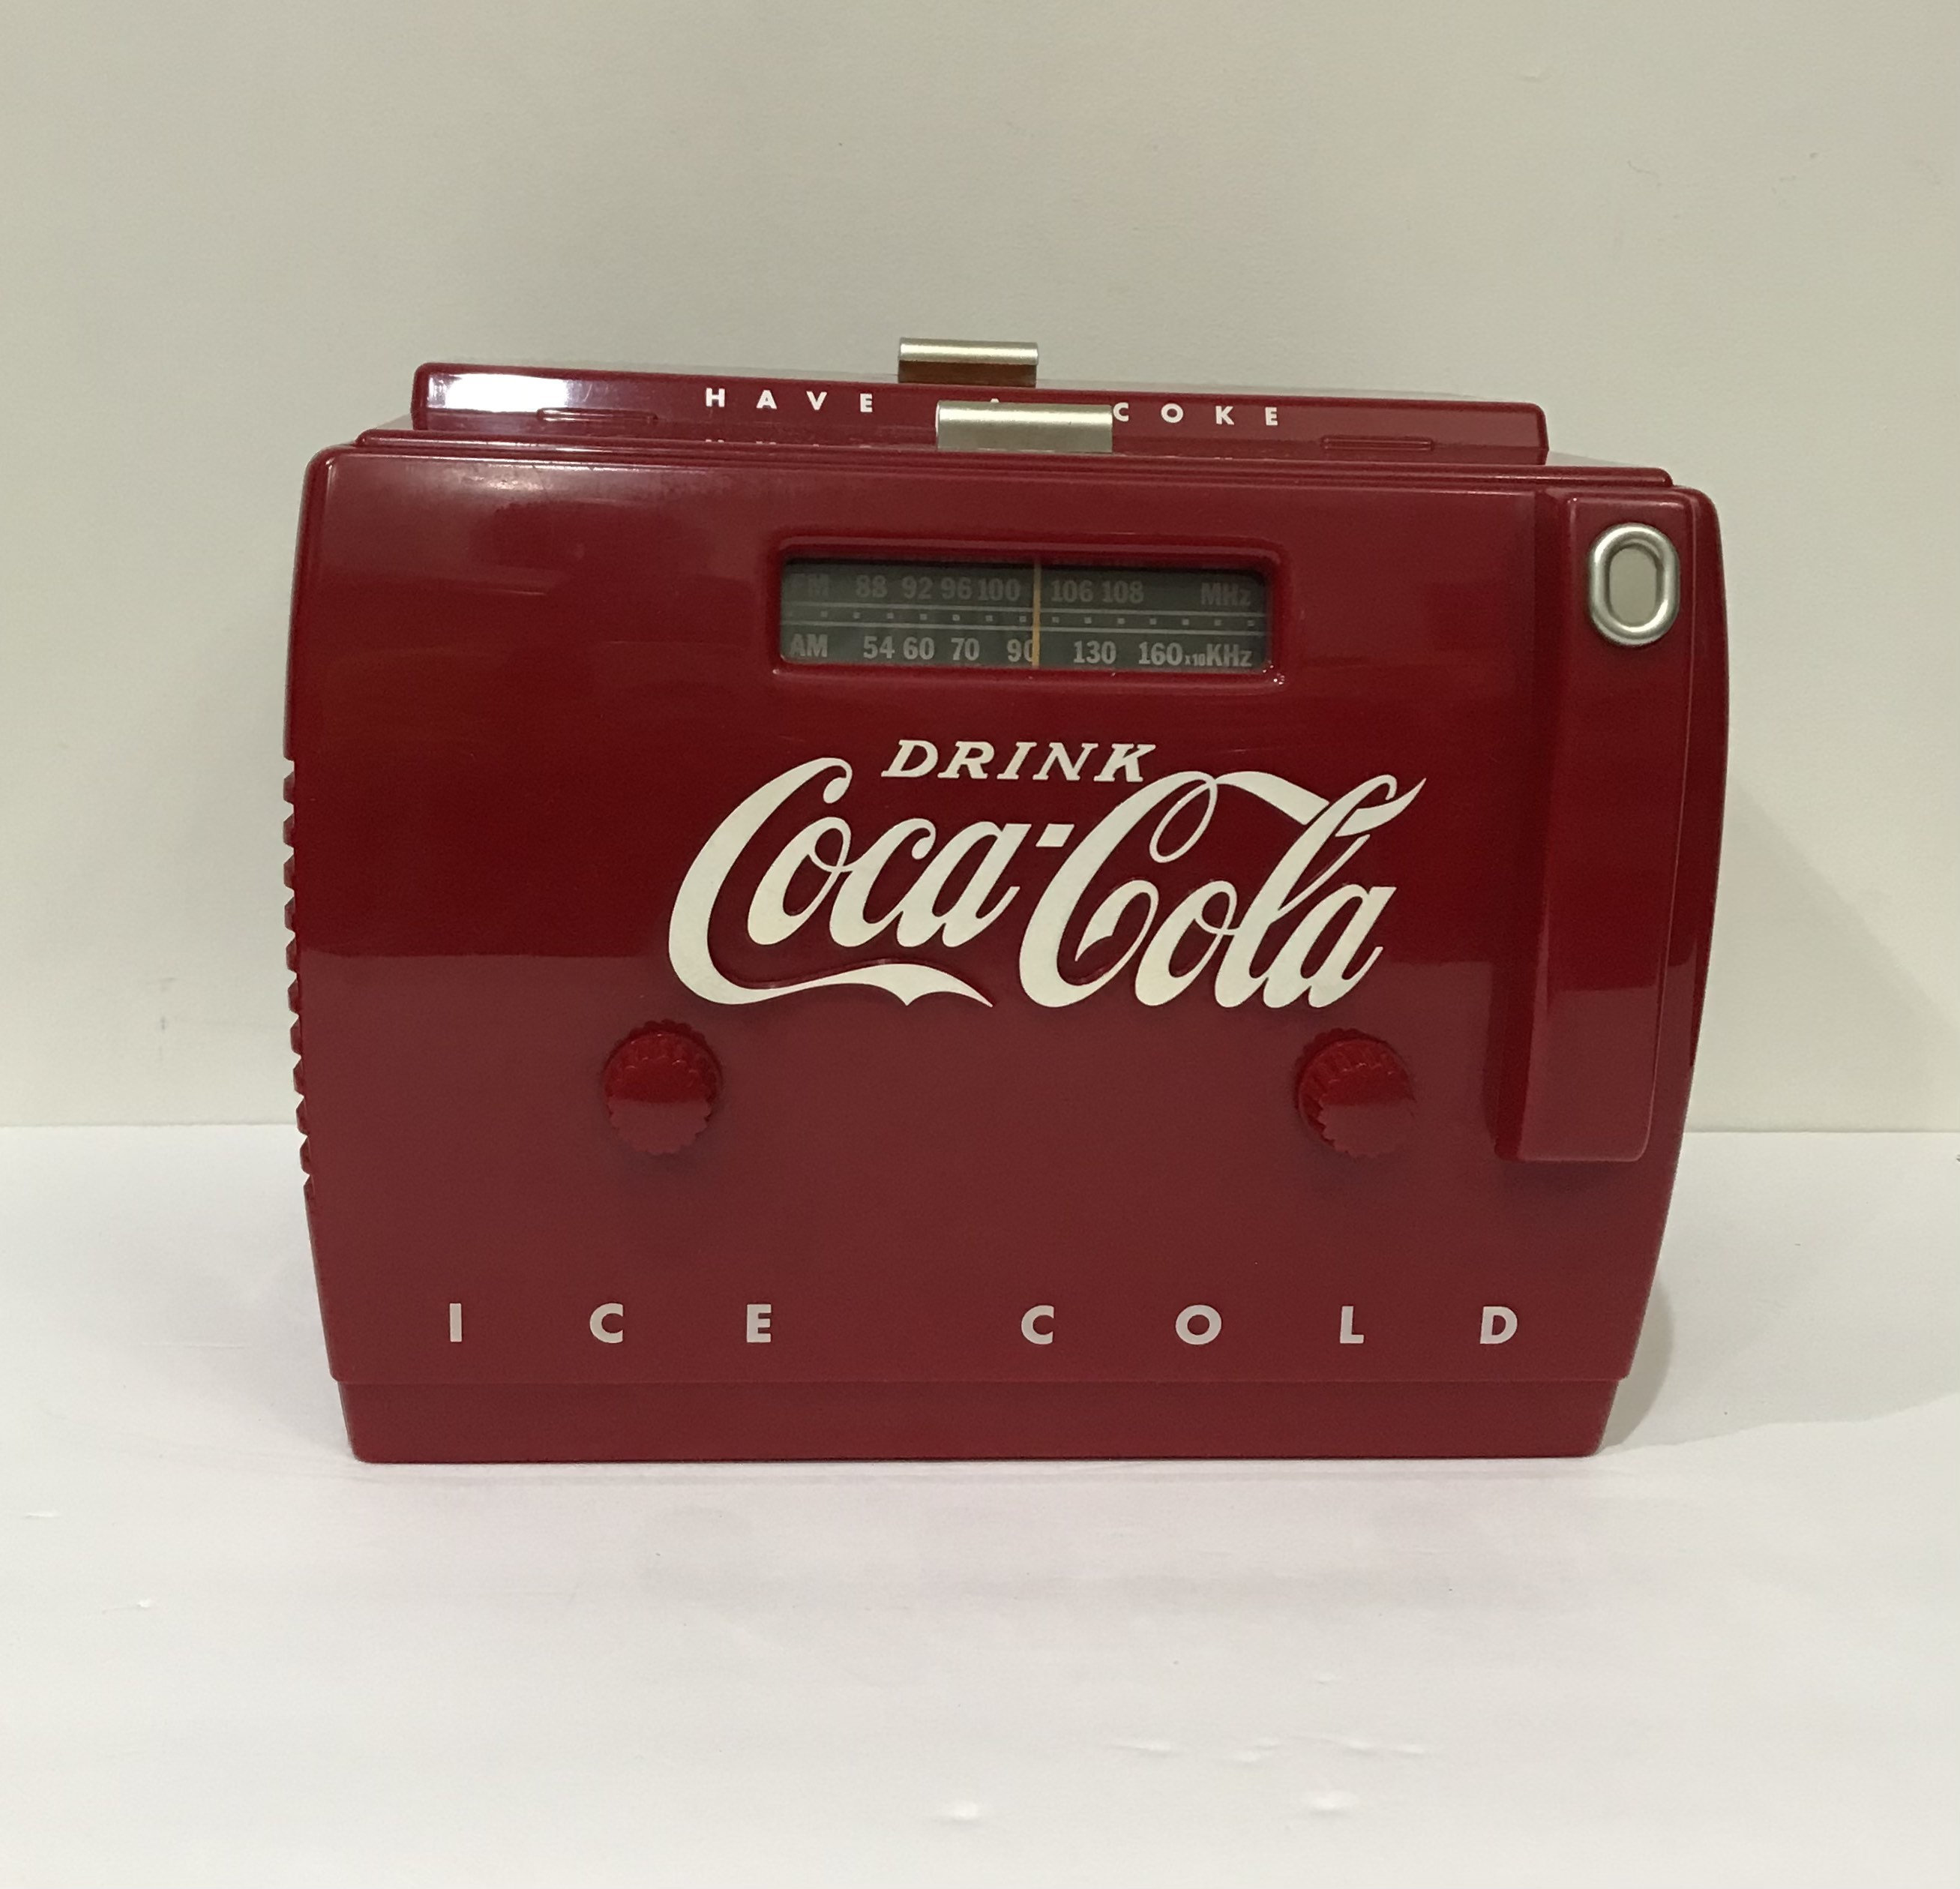 Vintage Otr 1949 Coca Cola Cooler Radio Am Fm Cassette Player Etsy